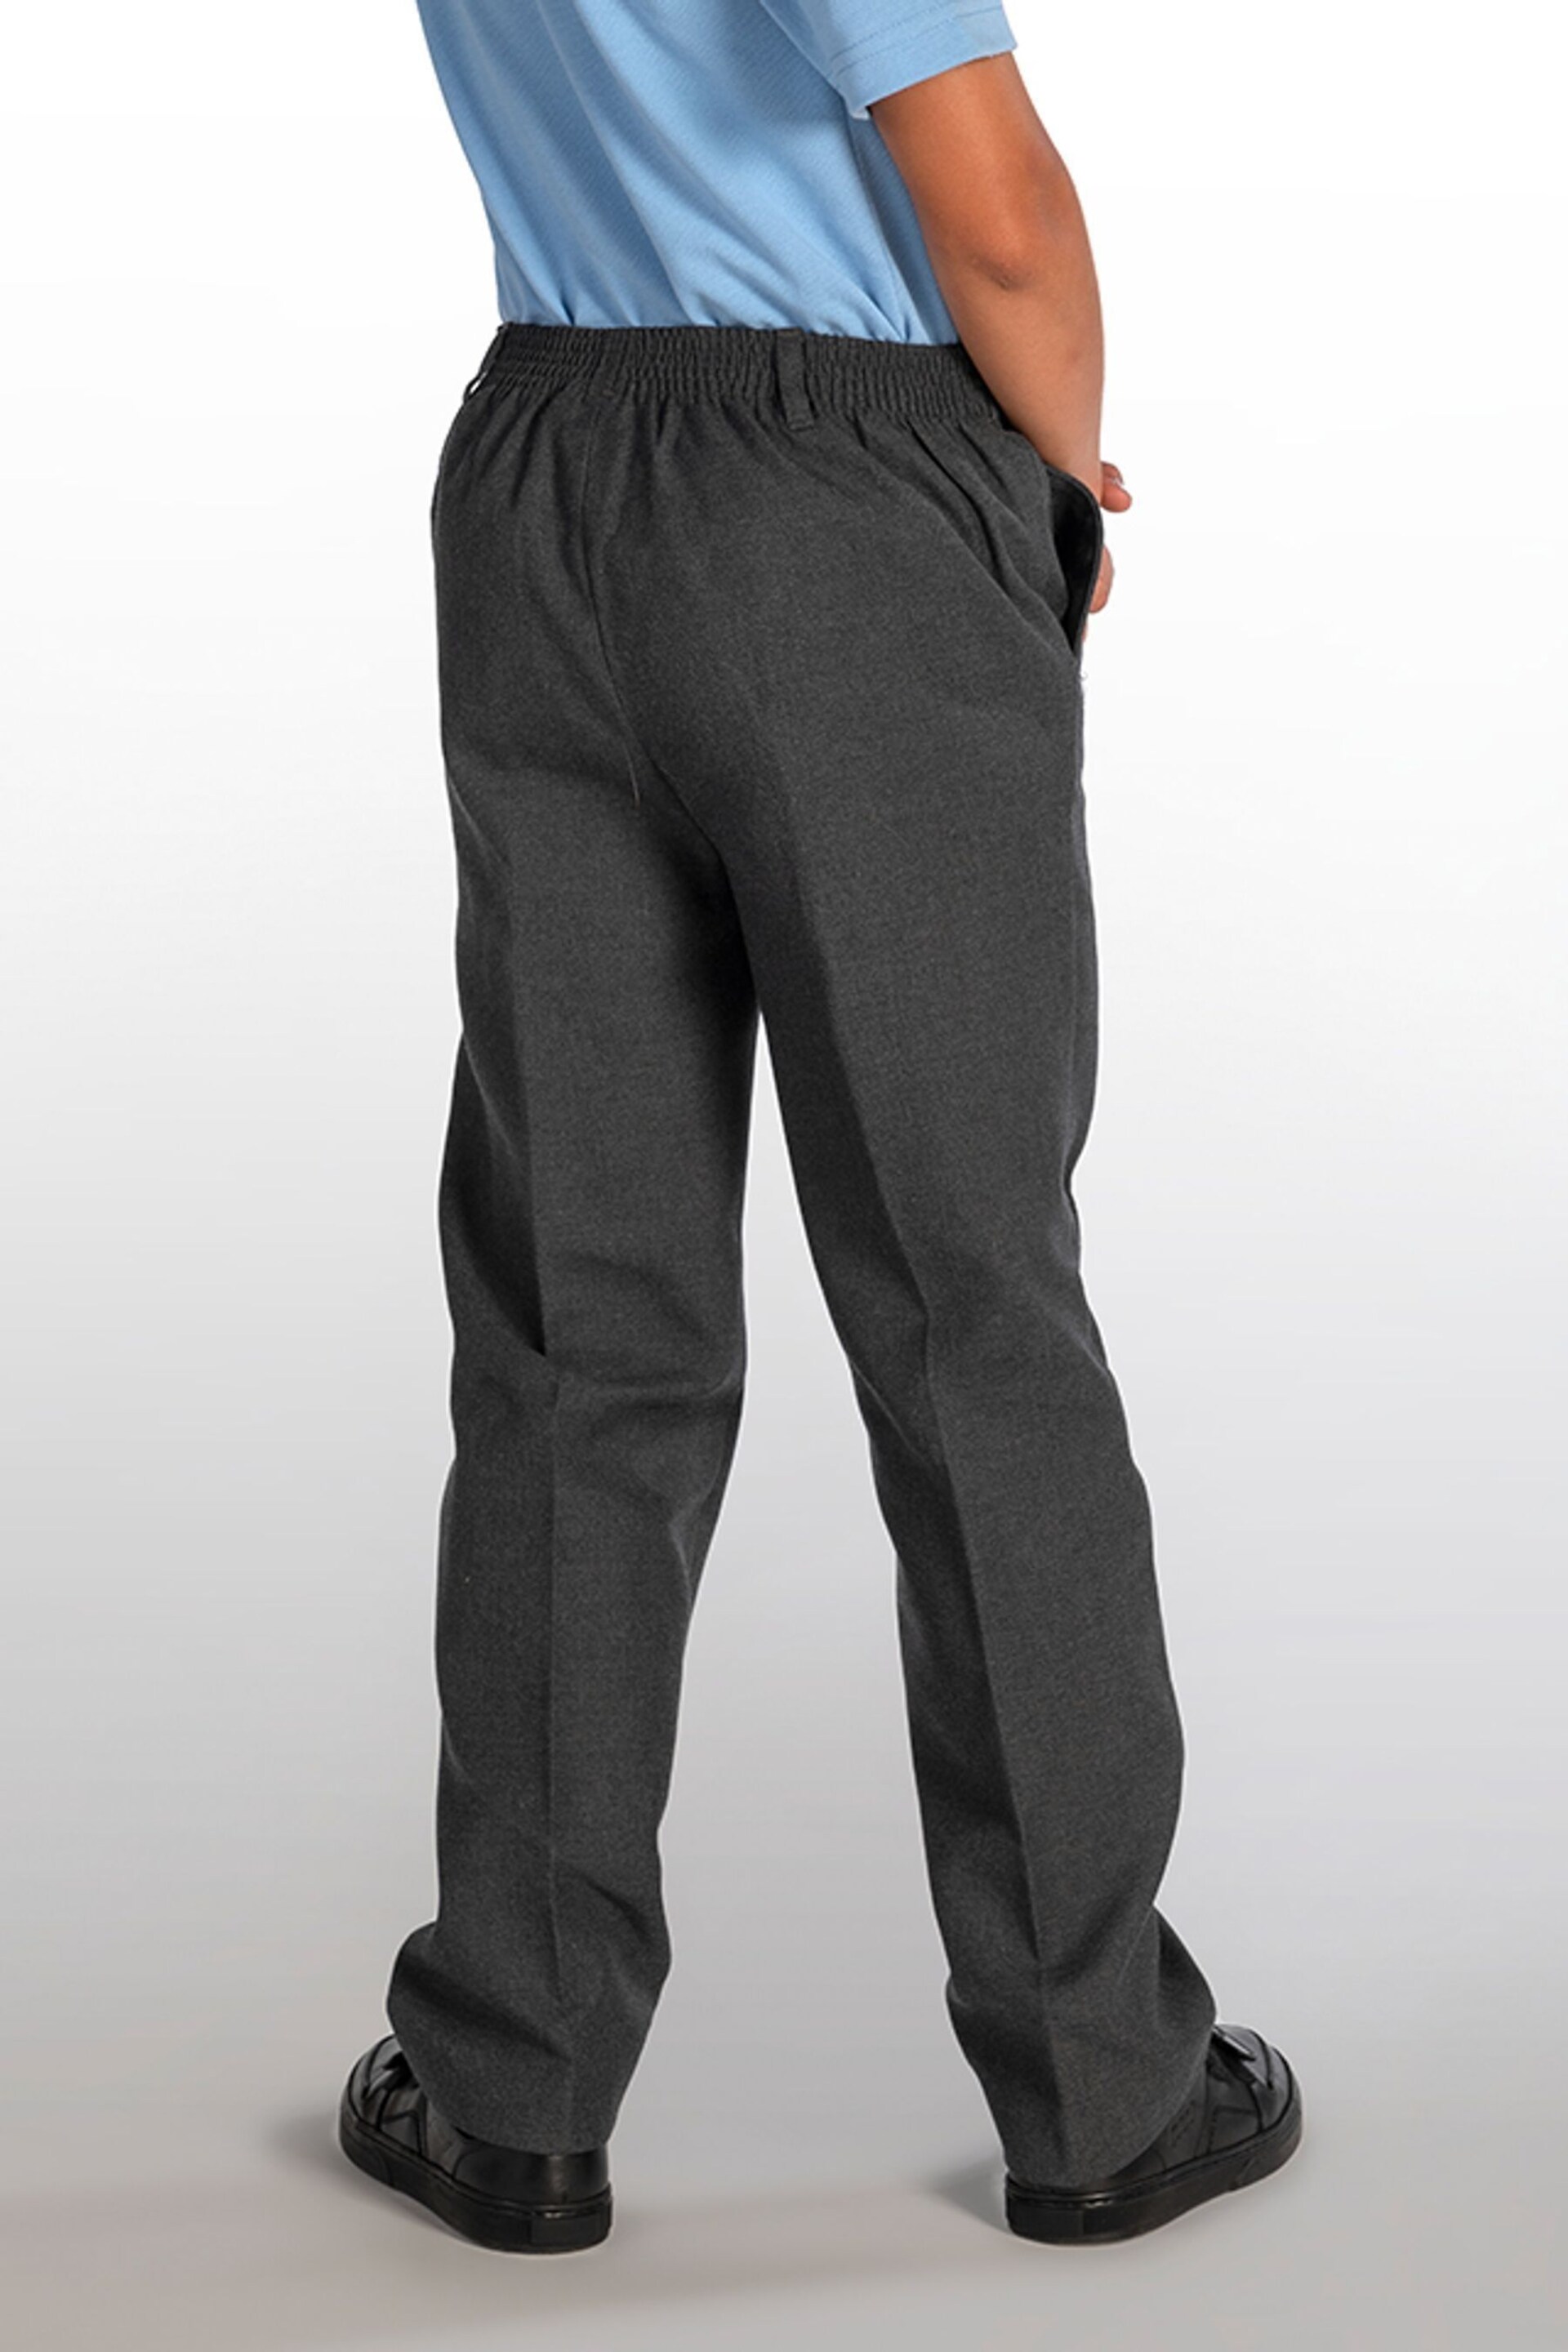 Trutex Junior Boys Classic Fit School Trousers - Image 2 of 5